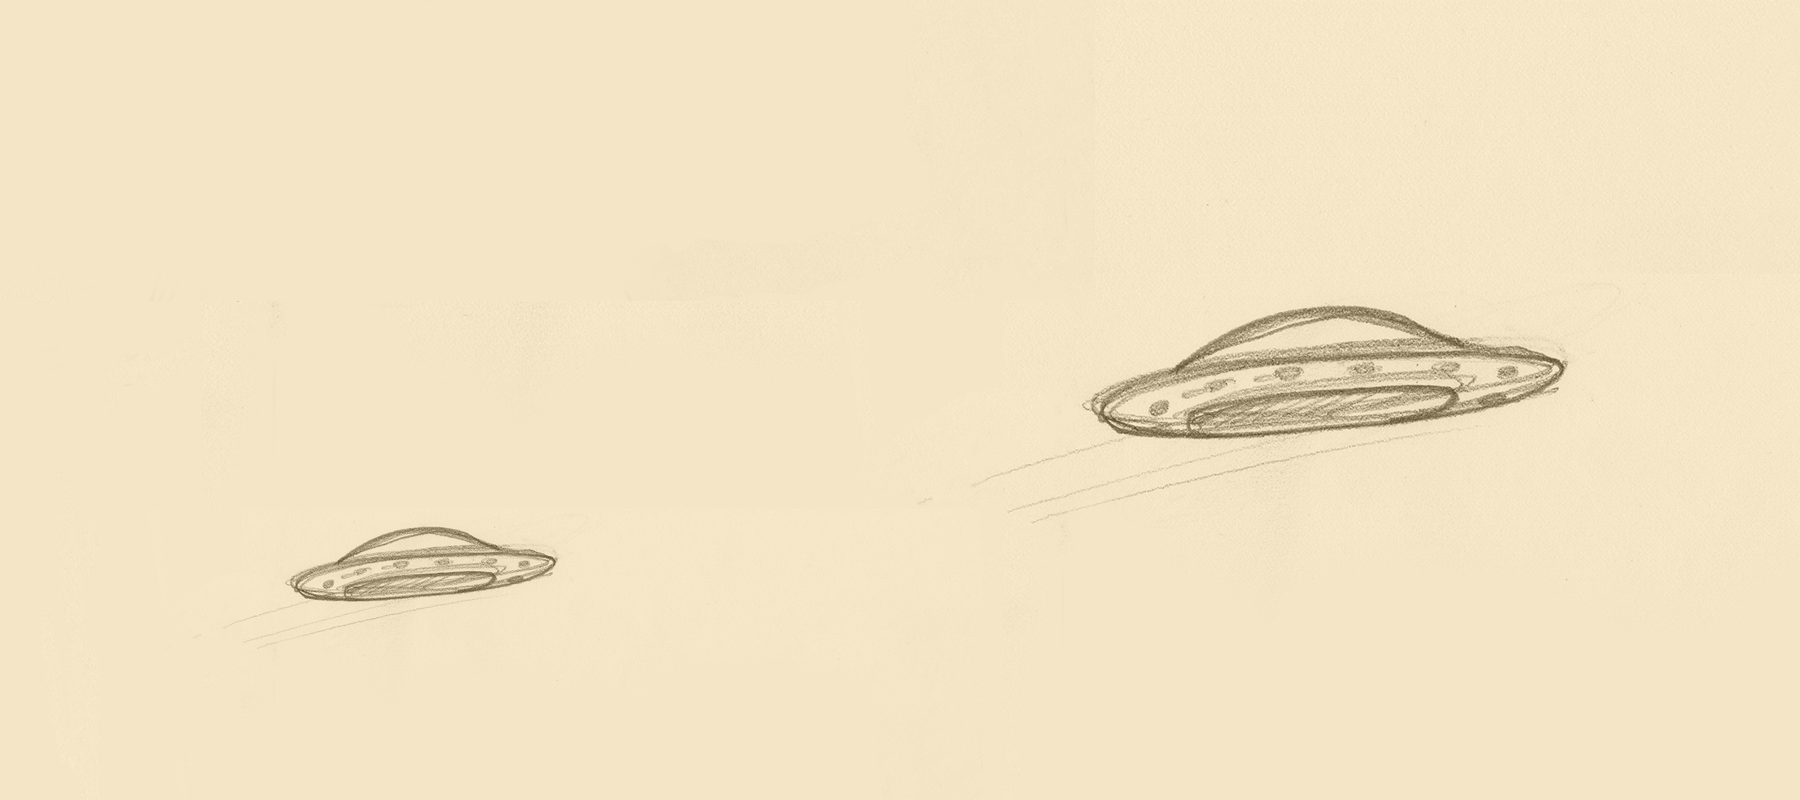 Flying saucer sketch by Denise Marta-Burch